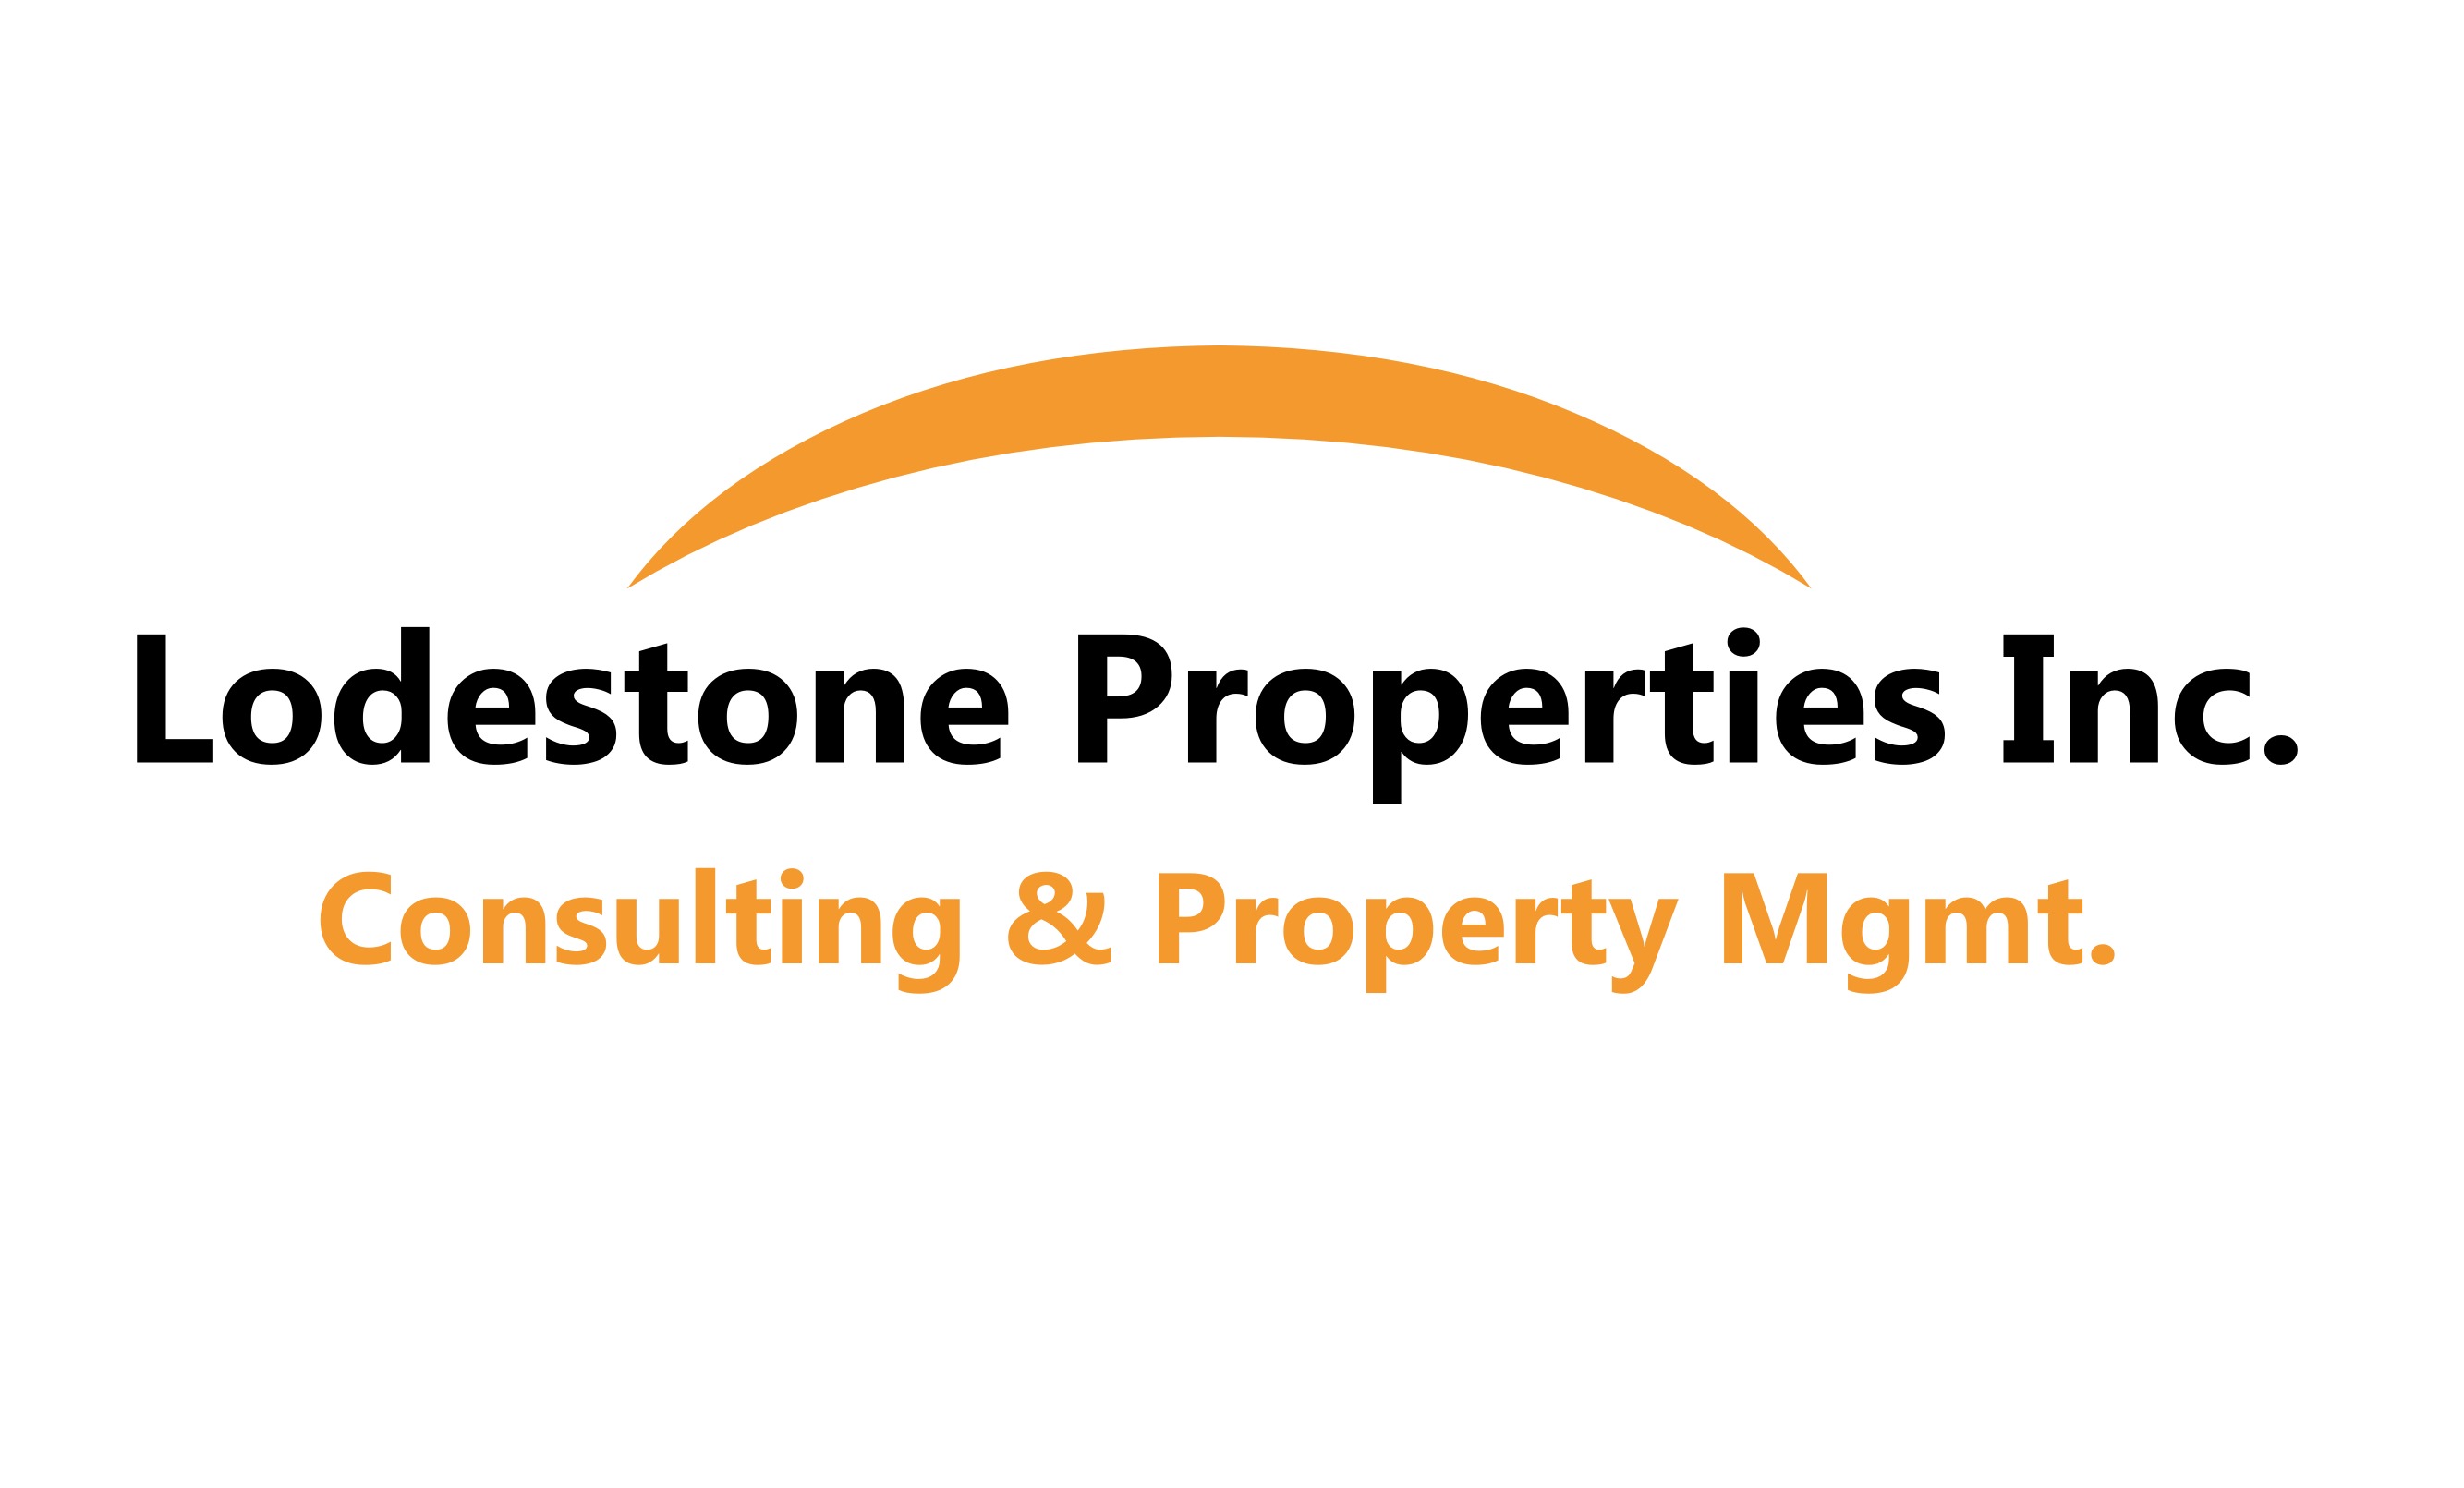 Lodestone Properties Inc.